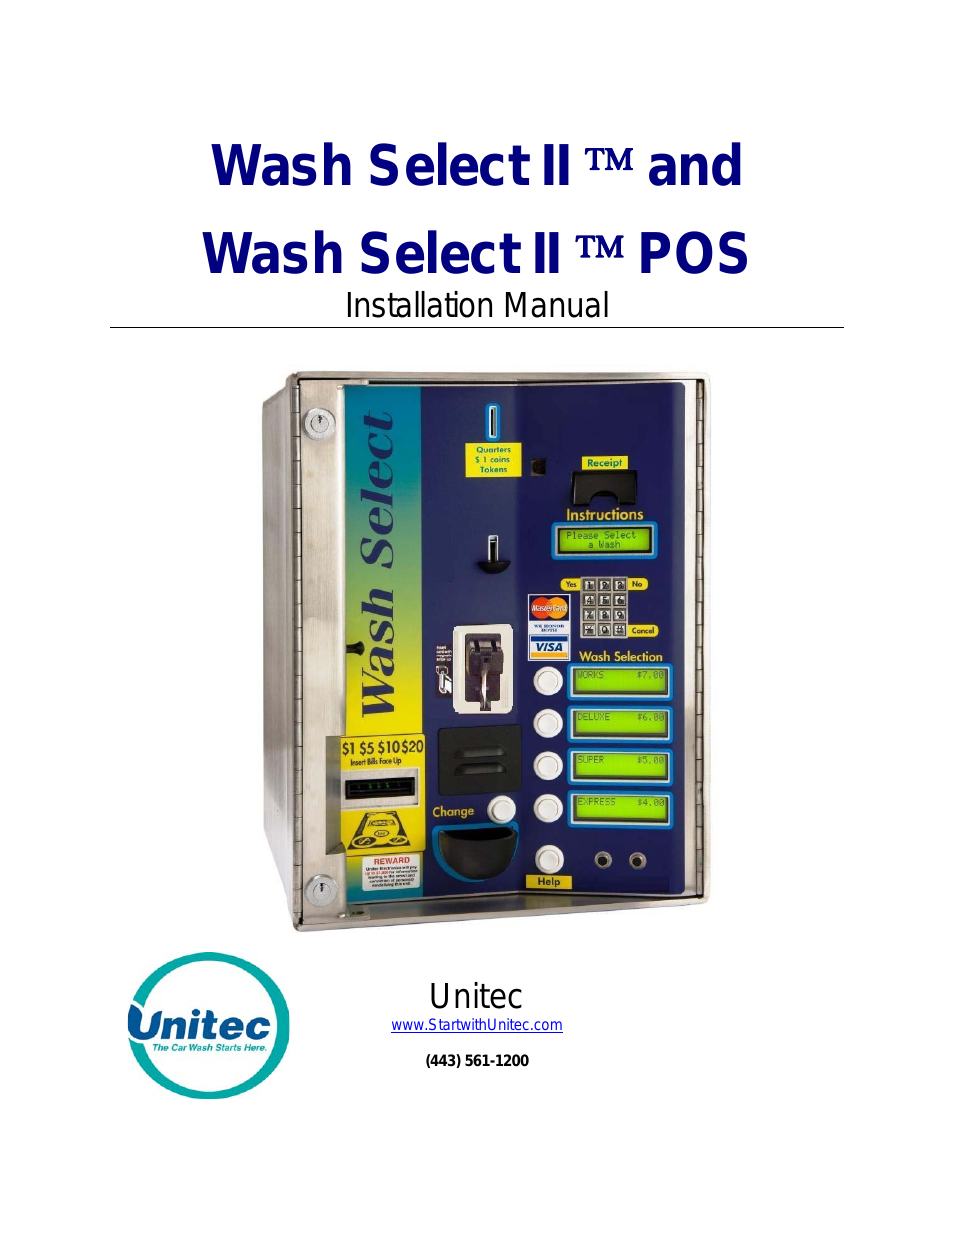 Wash Select II POS Installation Manual